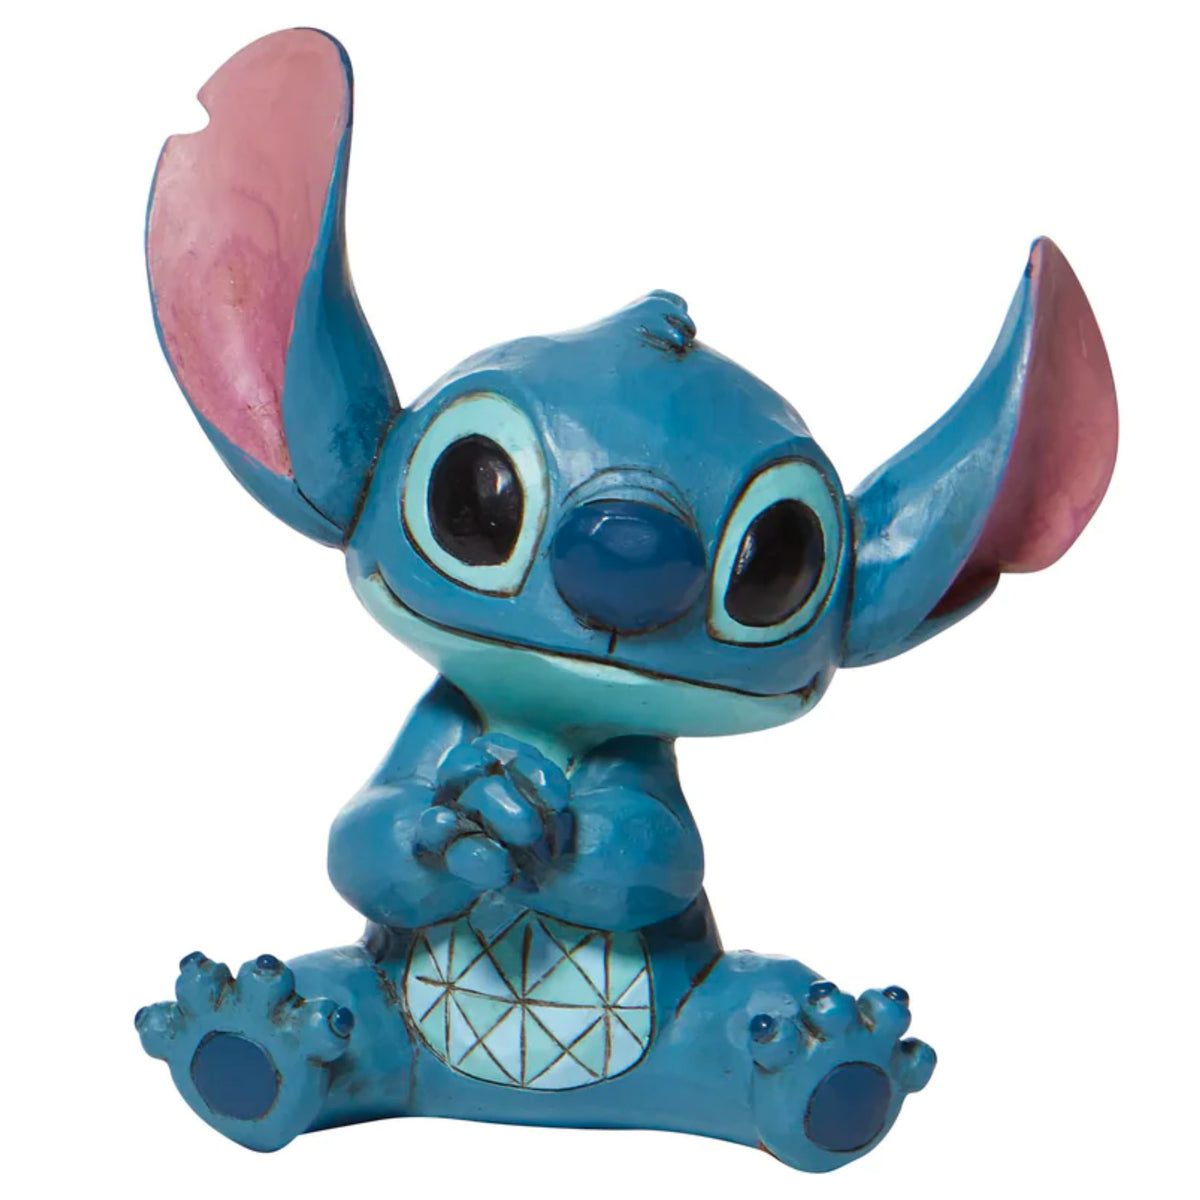 Disney Traditions - Stitch Mini Figurine